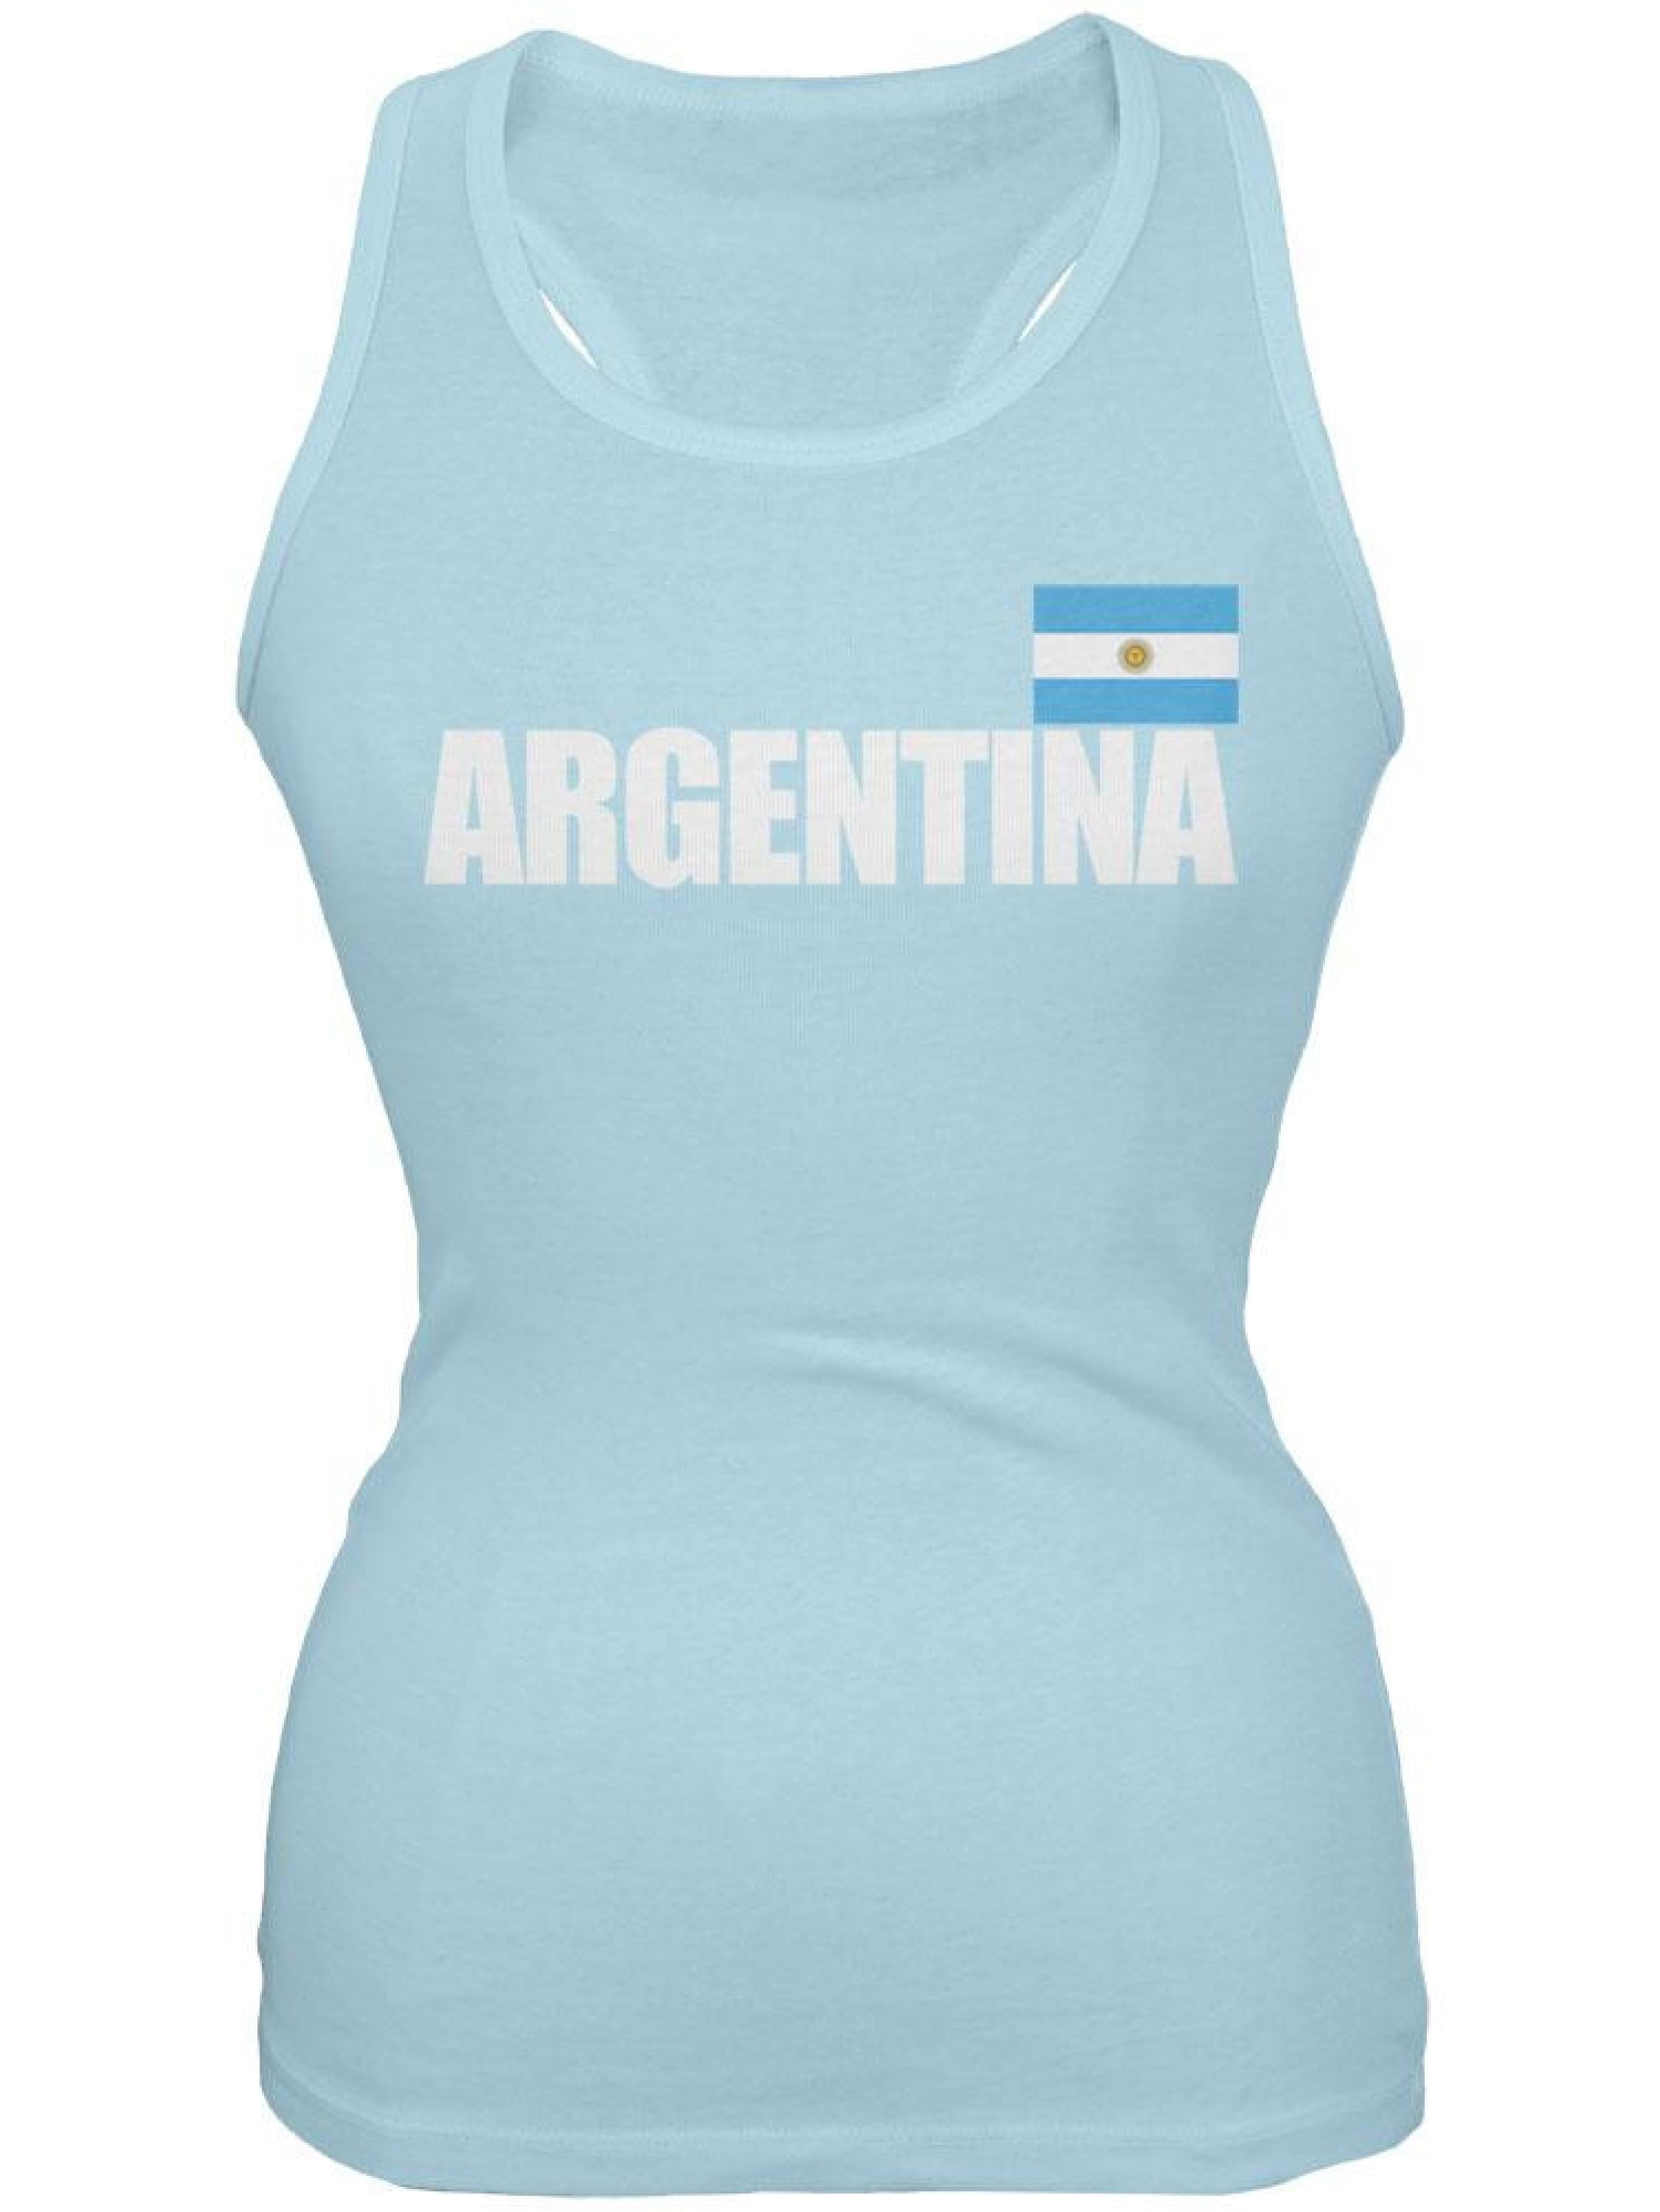 Argentina Athletic Retro Series Women's Junior Fit Tank Top Soccer